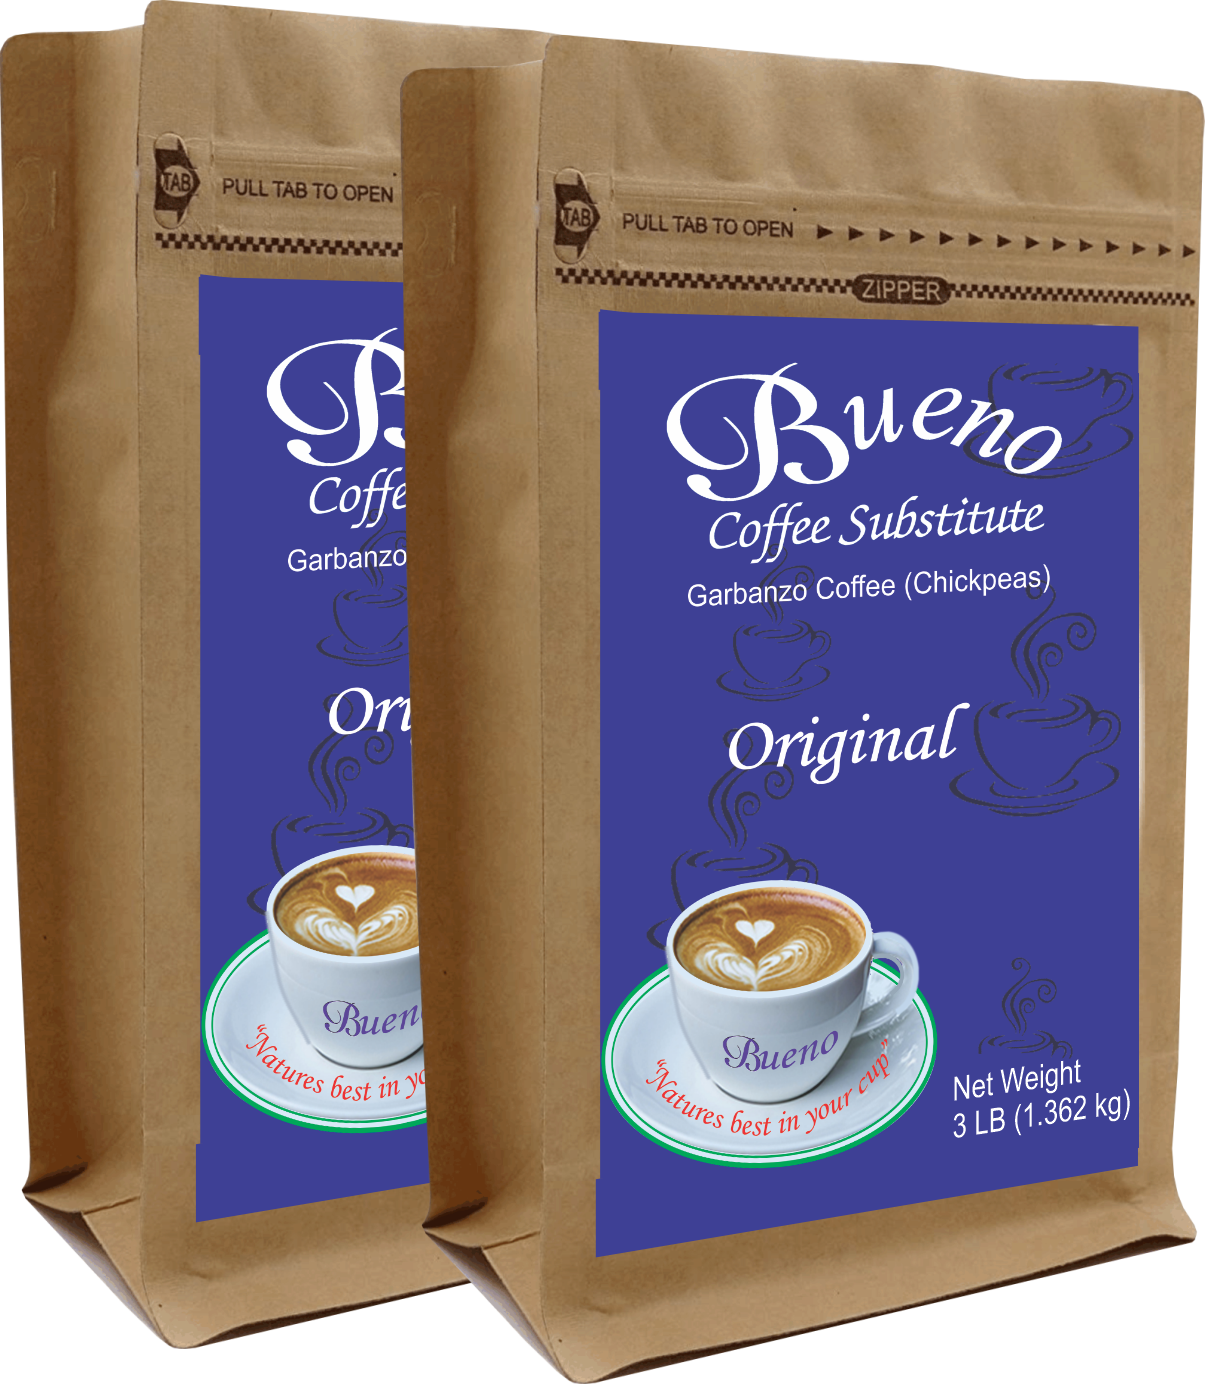 Original 2-3 pound packages Bueno Coffee Substitute, Original